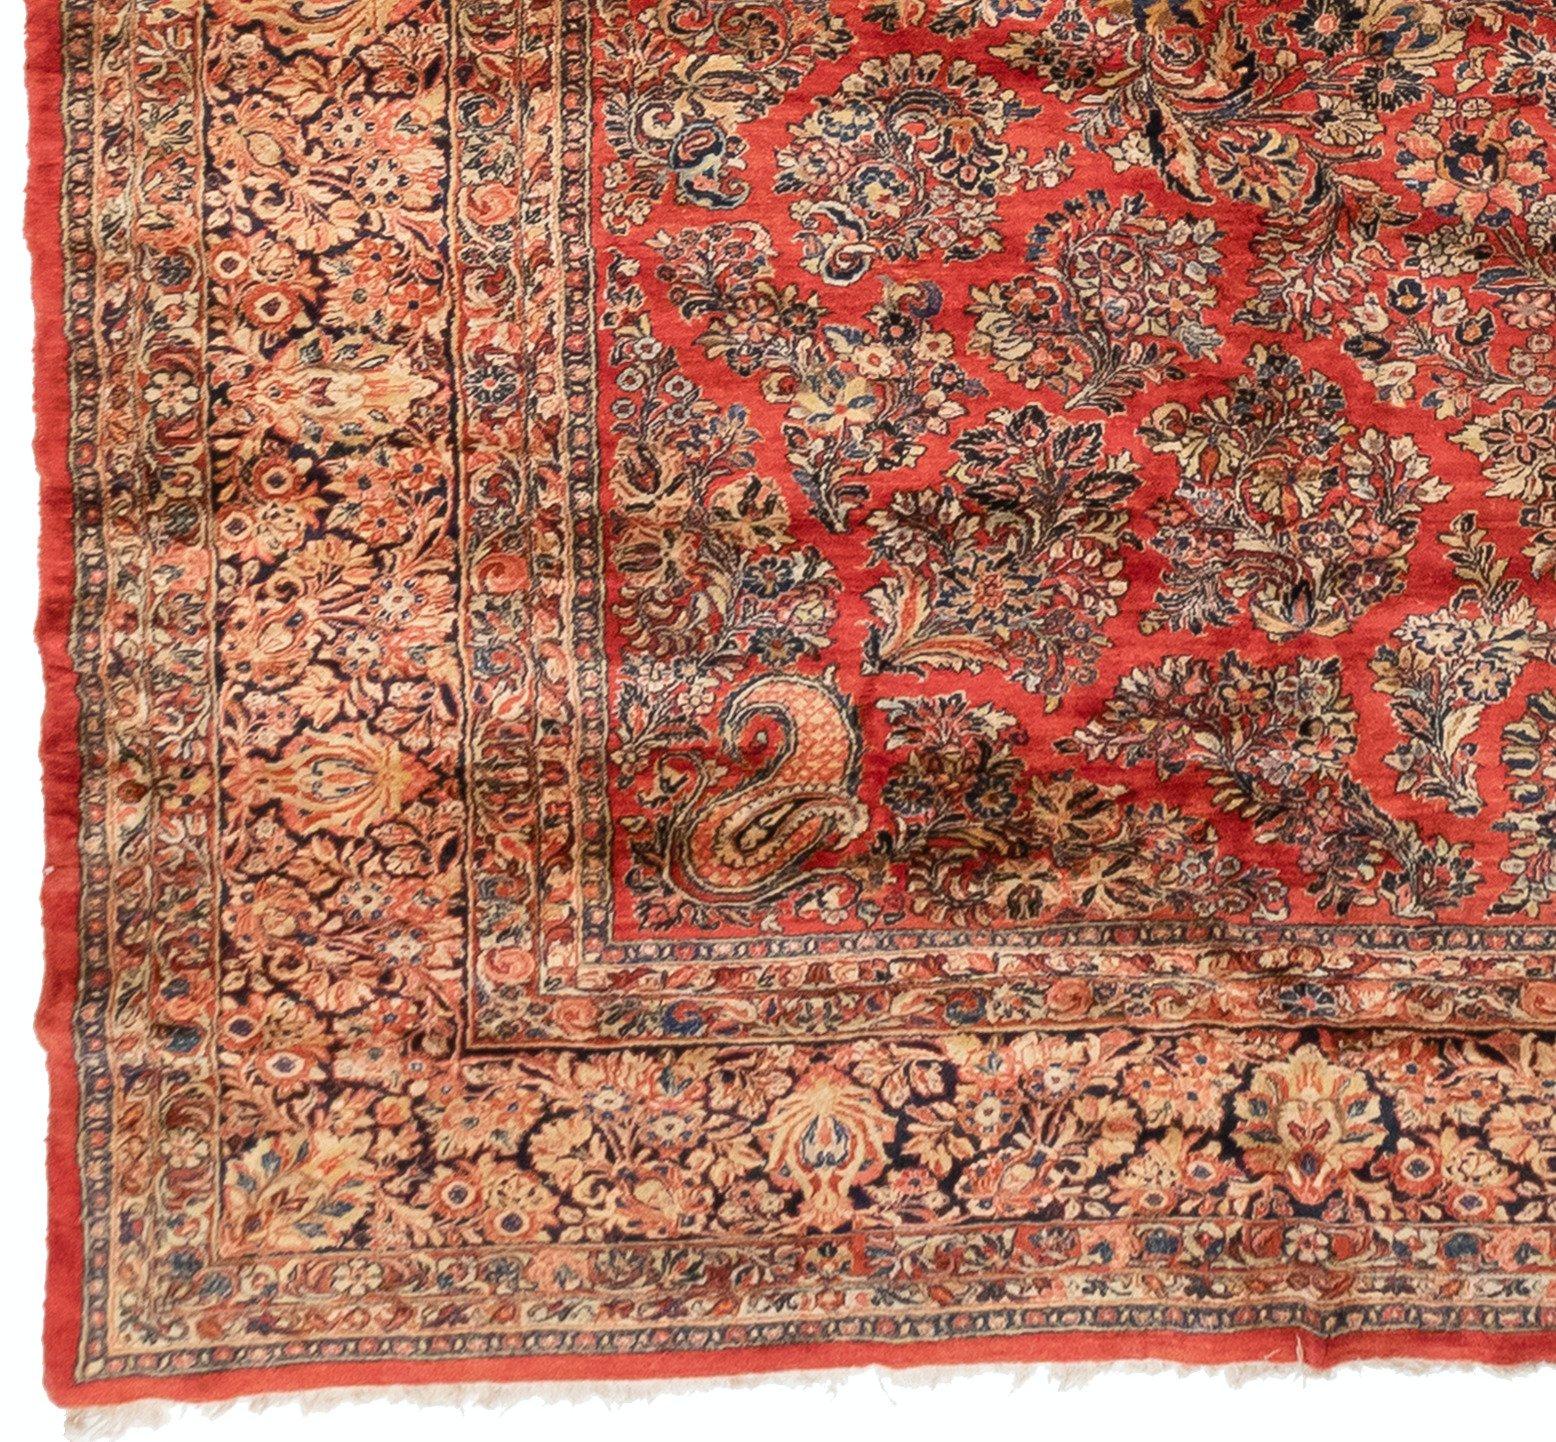 Sarouk Farahan Antique Large Oversize Persian Red Floral Sarouk Rug, c. 1920s For Sale